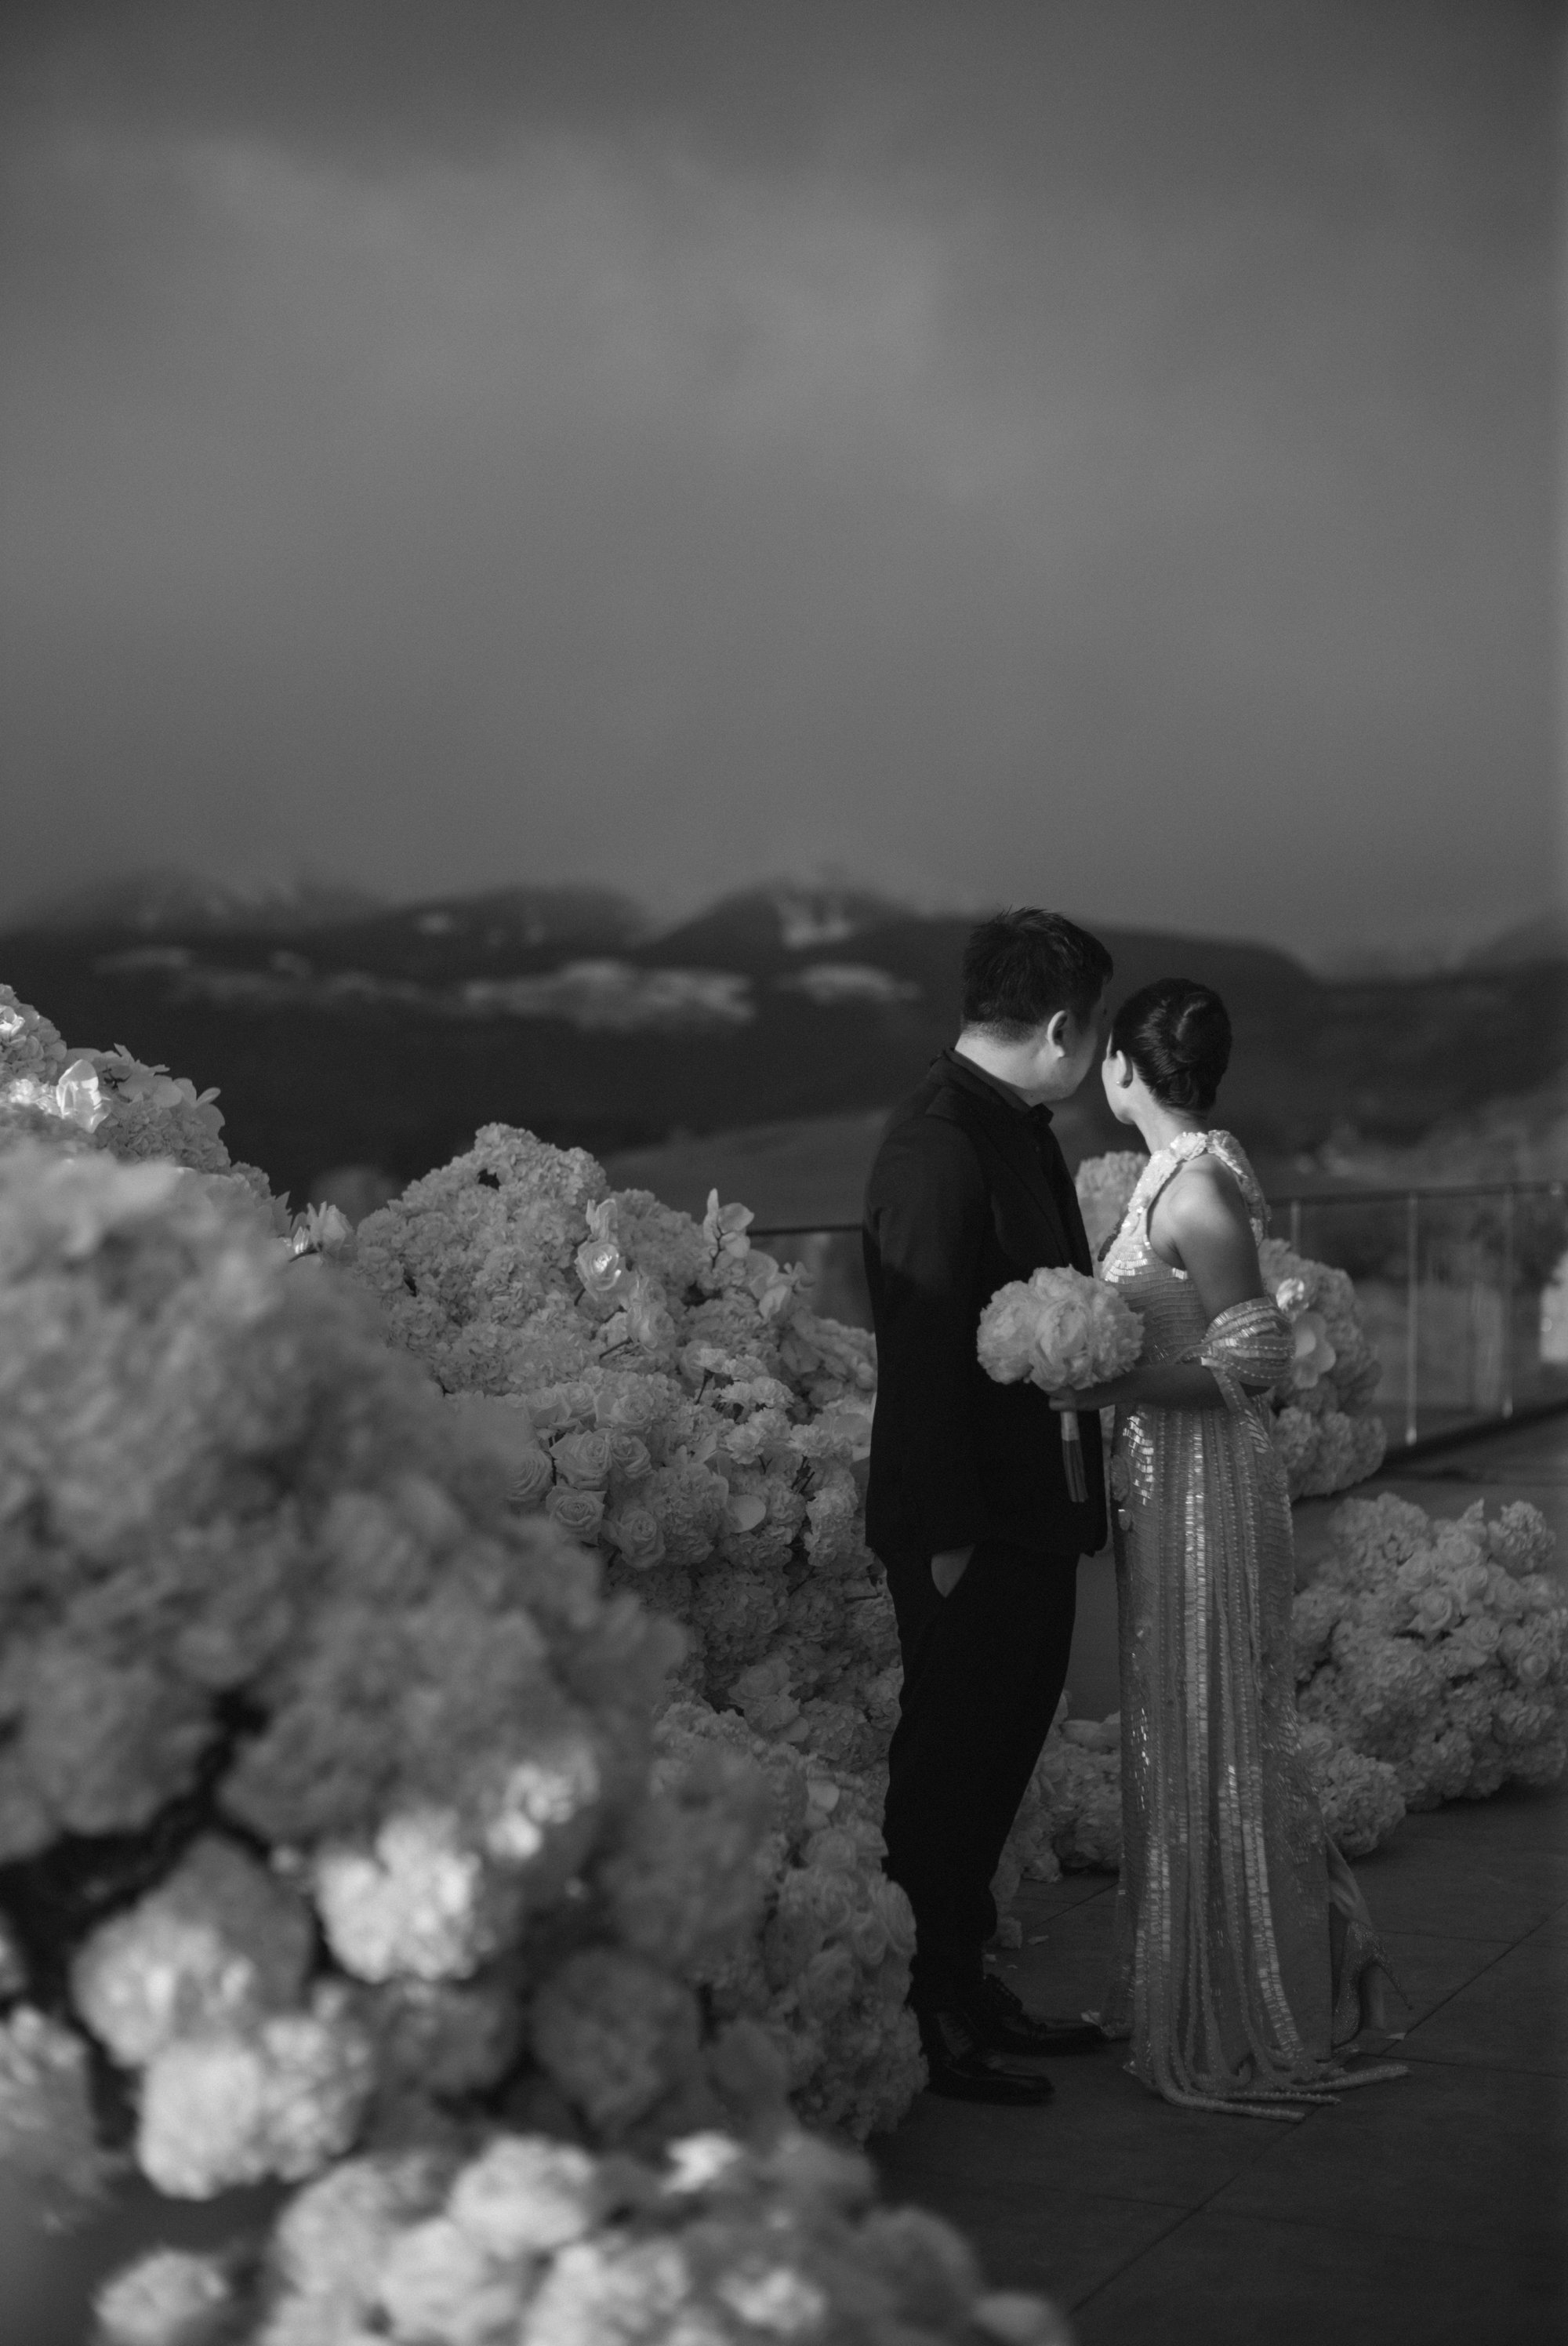 Prawira-Evelyn-Dolomites-Italy-Santre wedding-Yefta Gunawan-Jeriko MUA-Carol Kuntjoro Photography-115.jpg